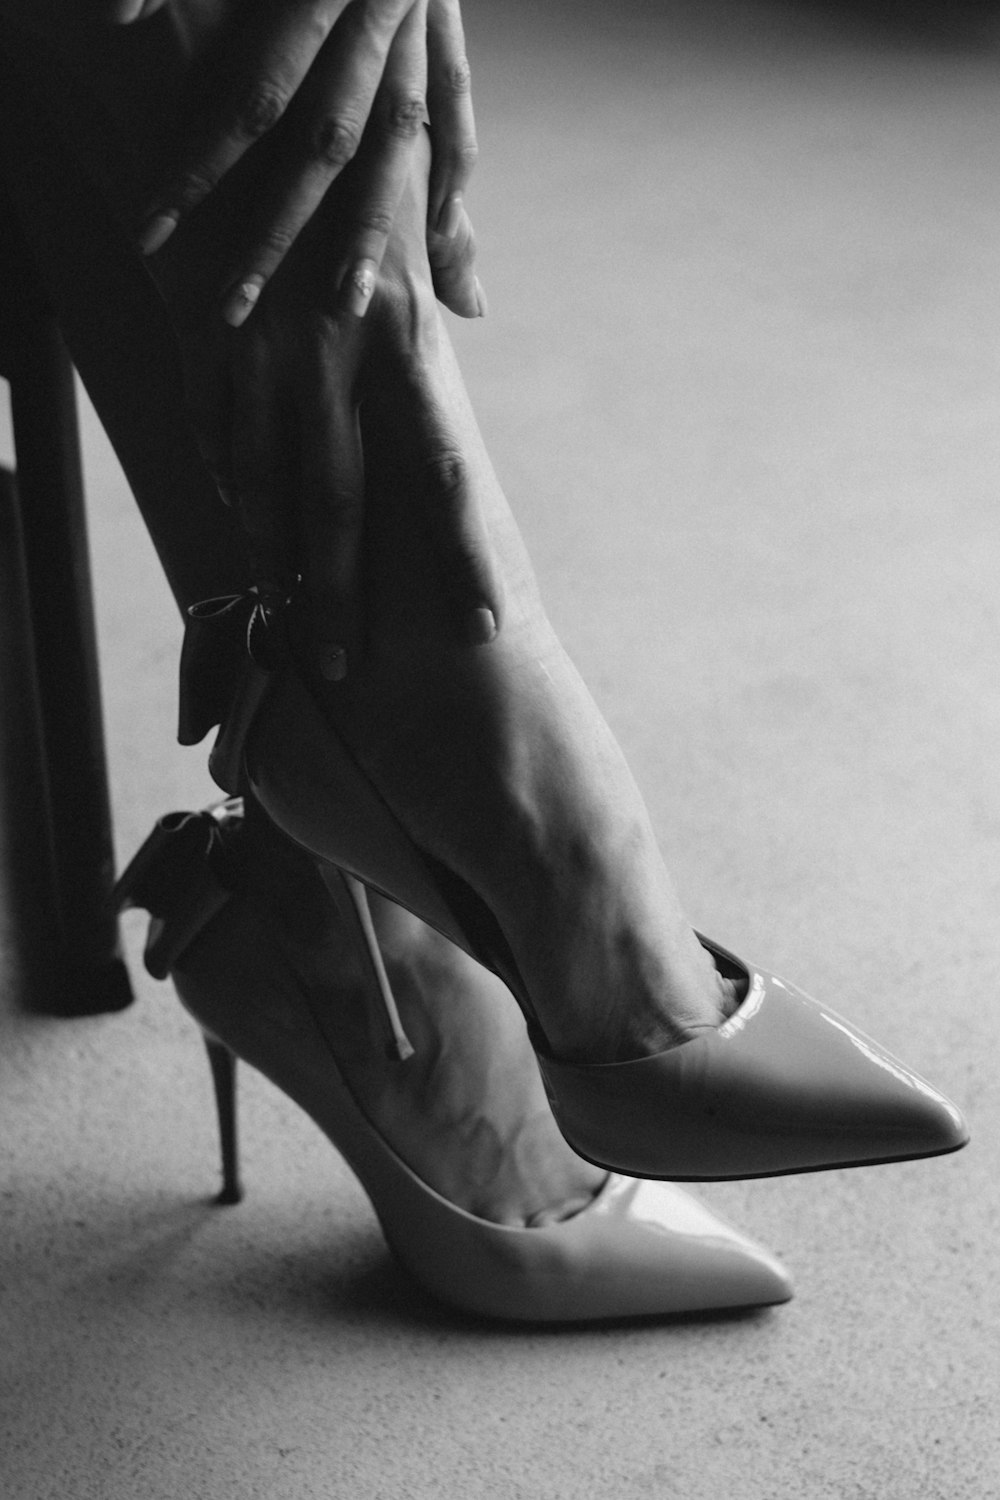 a woman's feet in high heels